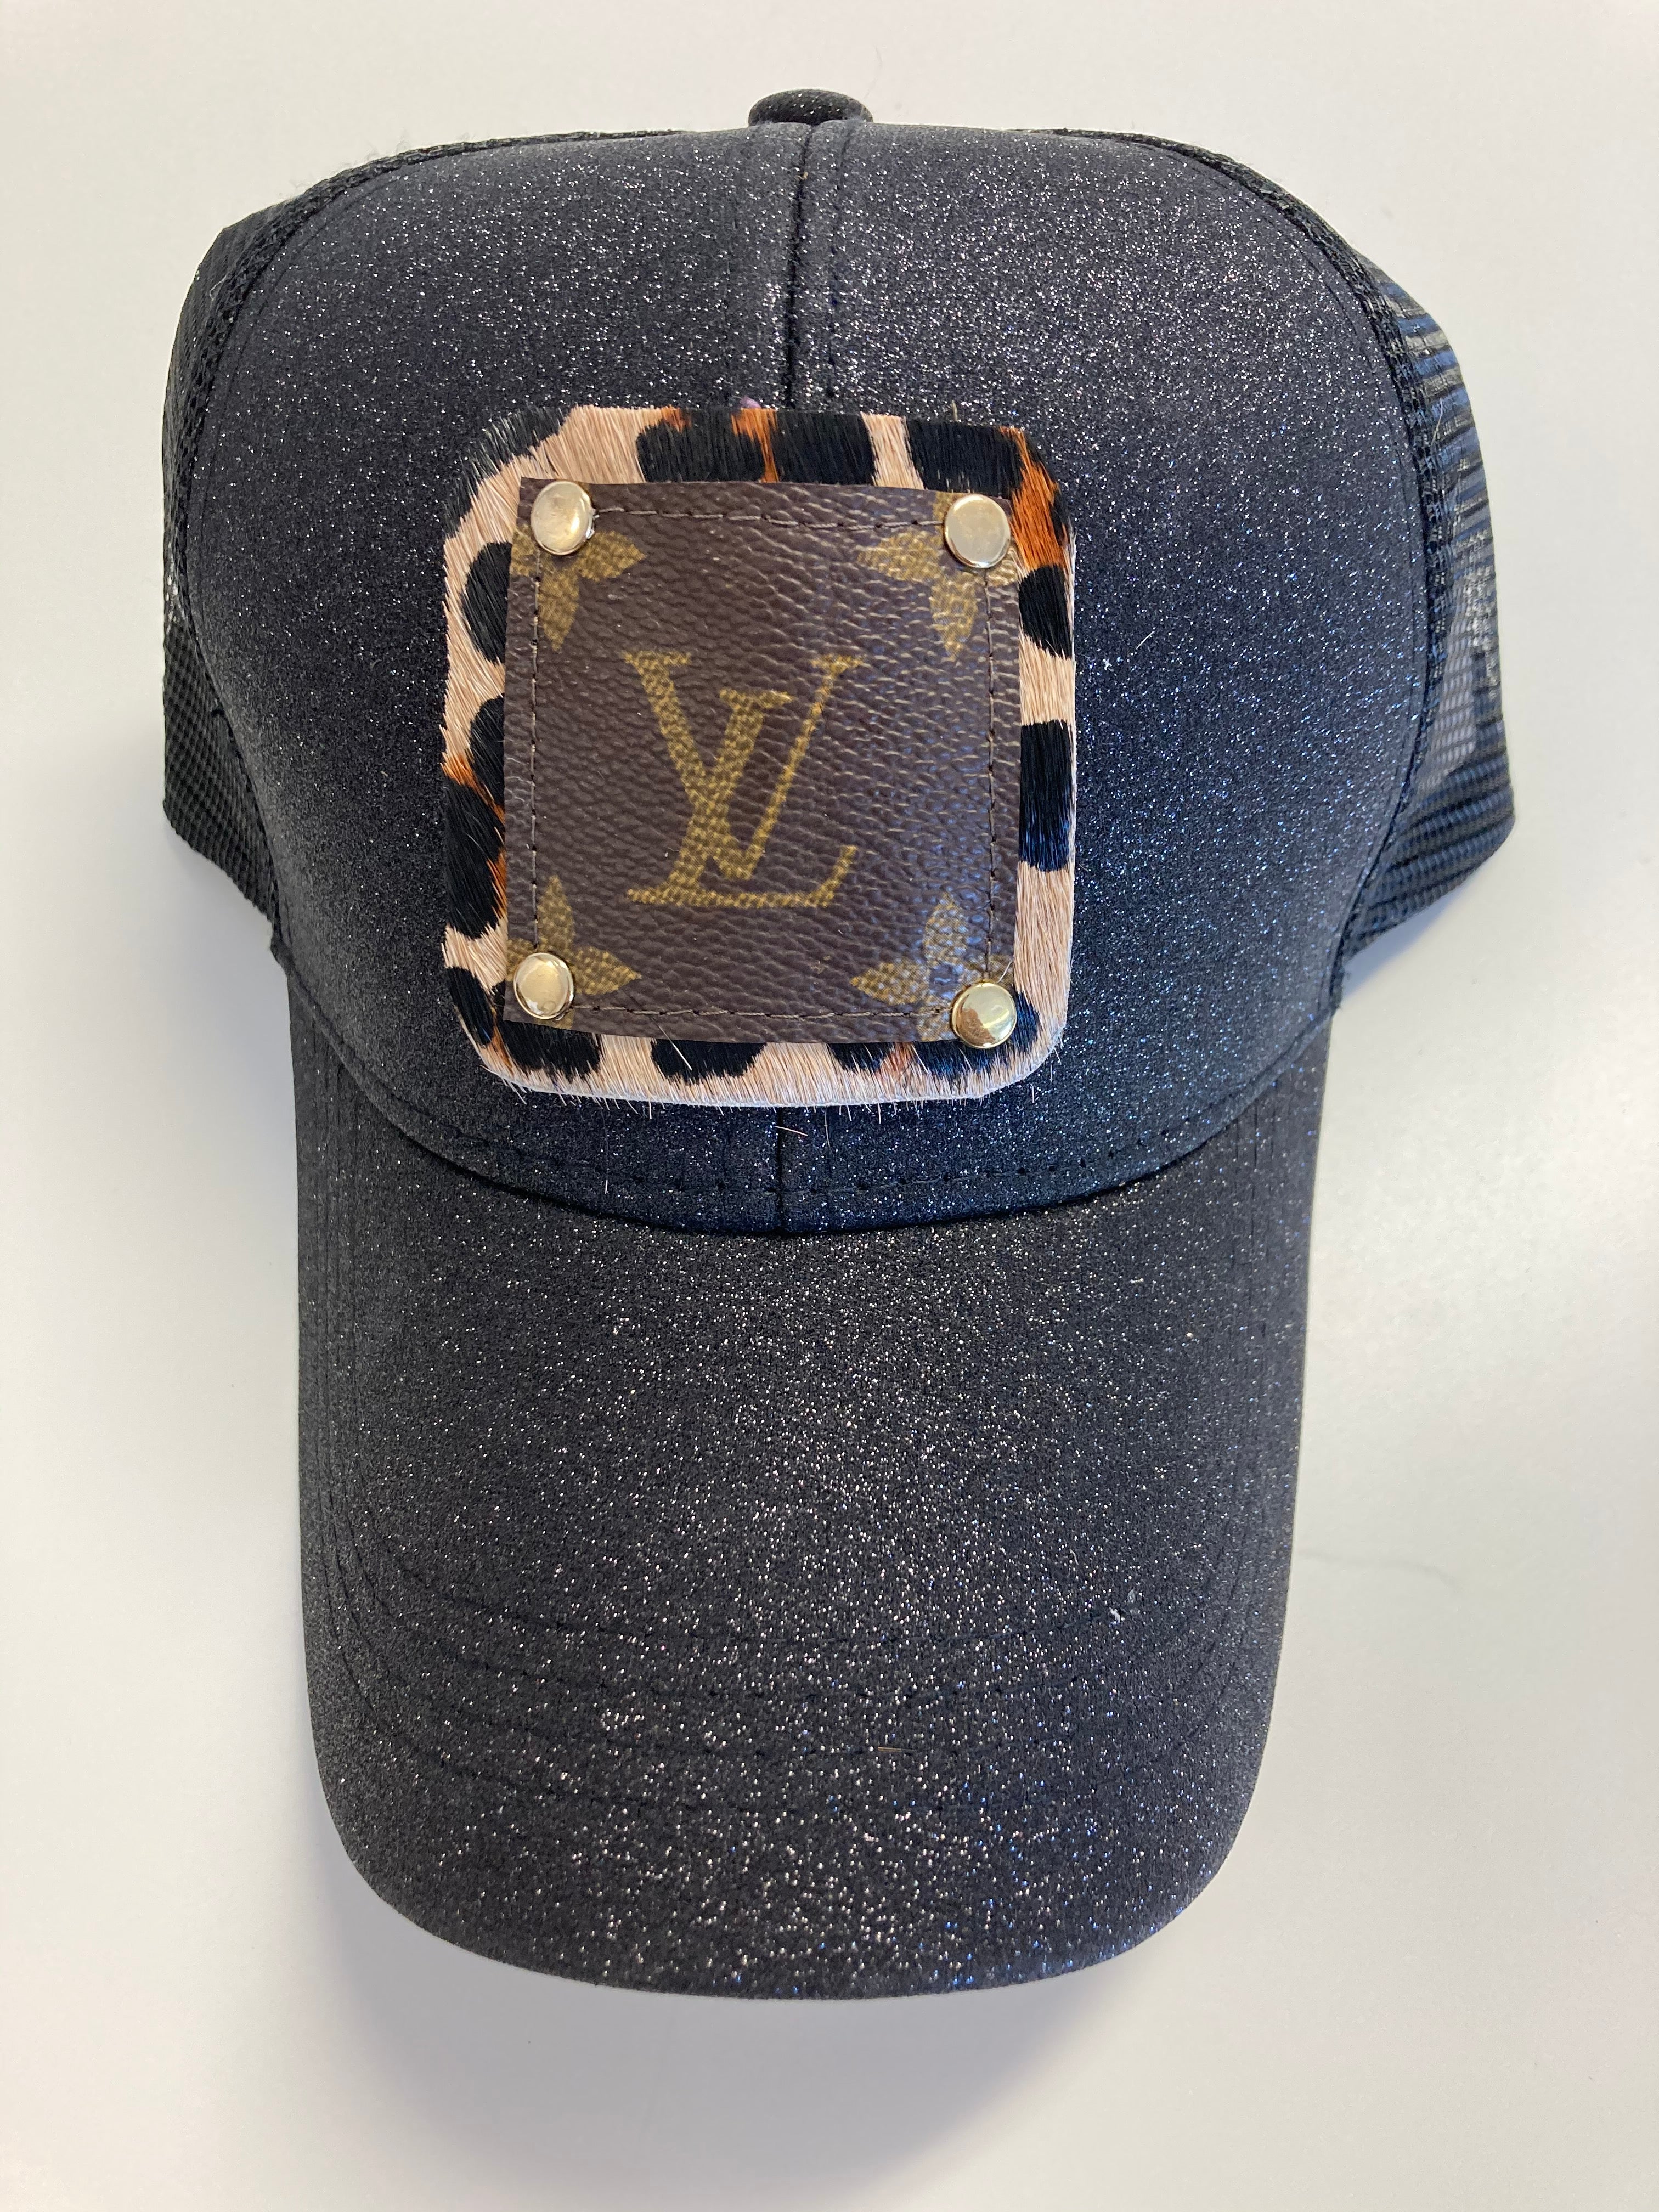 Louis Vuitton Black And Gold Trucker Hat